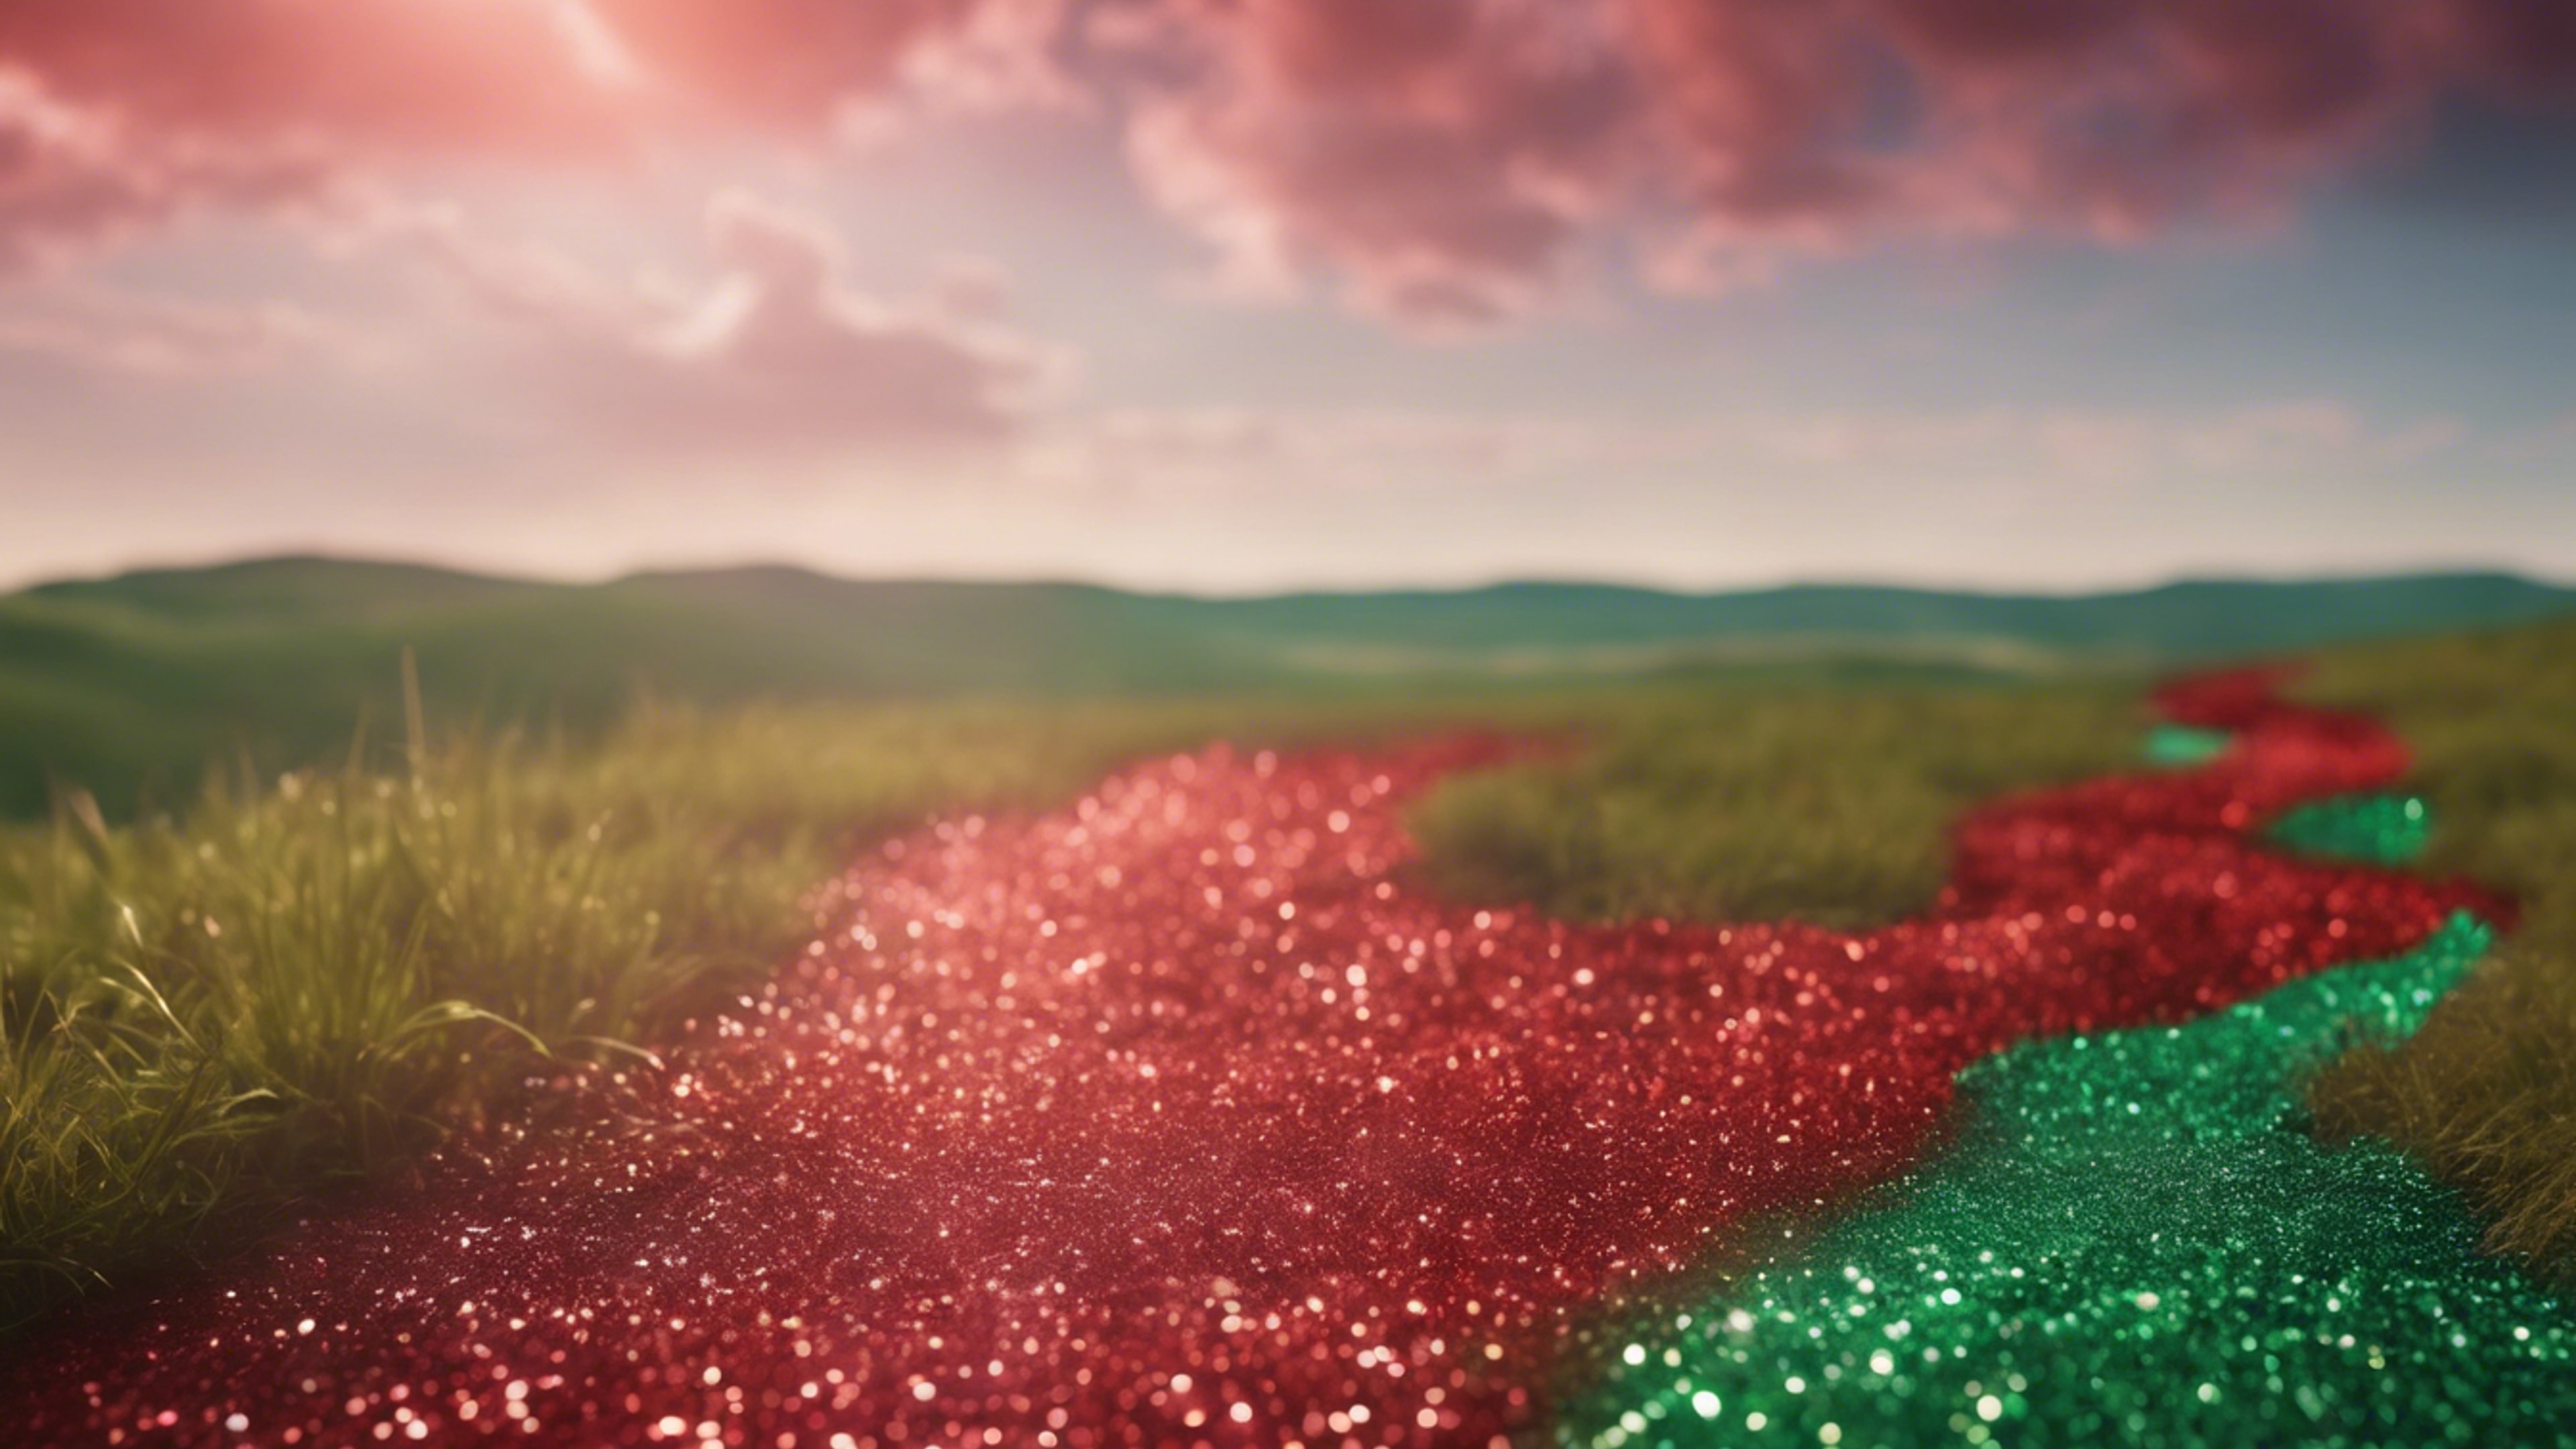 Path of shiny green and red glitter towards the horizon壁紙[4b670e6c3f1f43adb6d1]